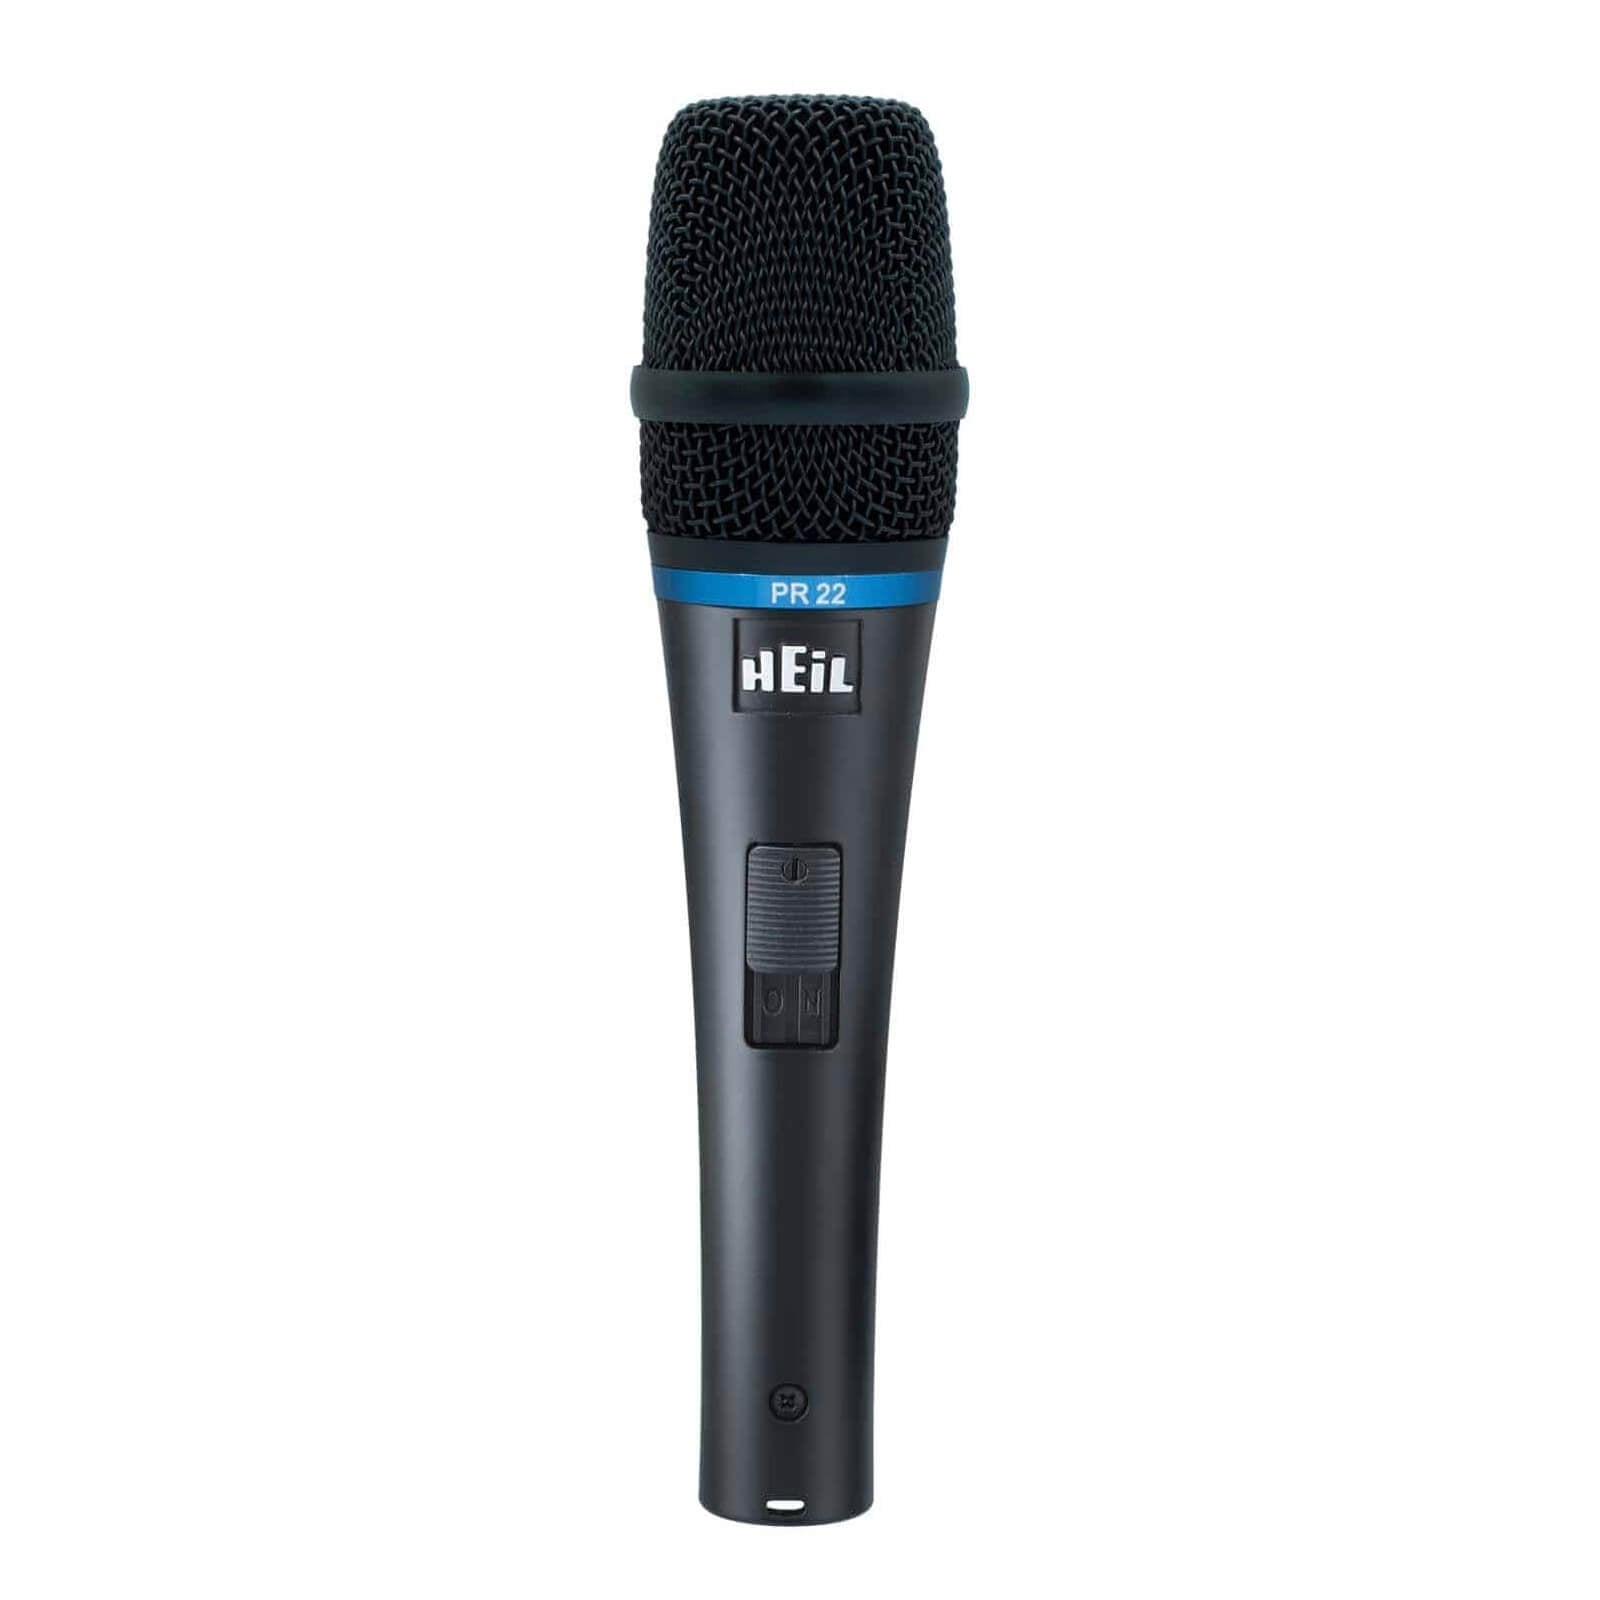 Heil PR 22 SUT Handheld Dynamic Vocal Microphone, switch